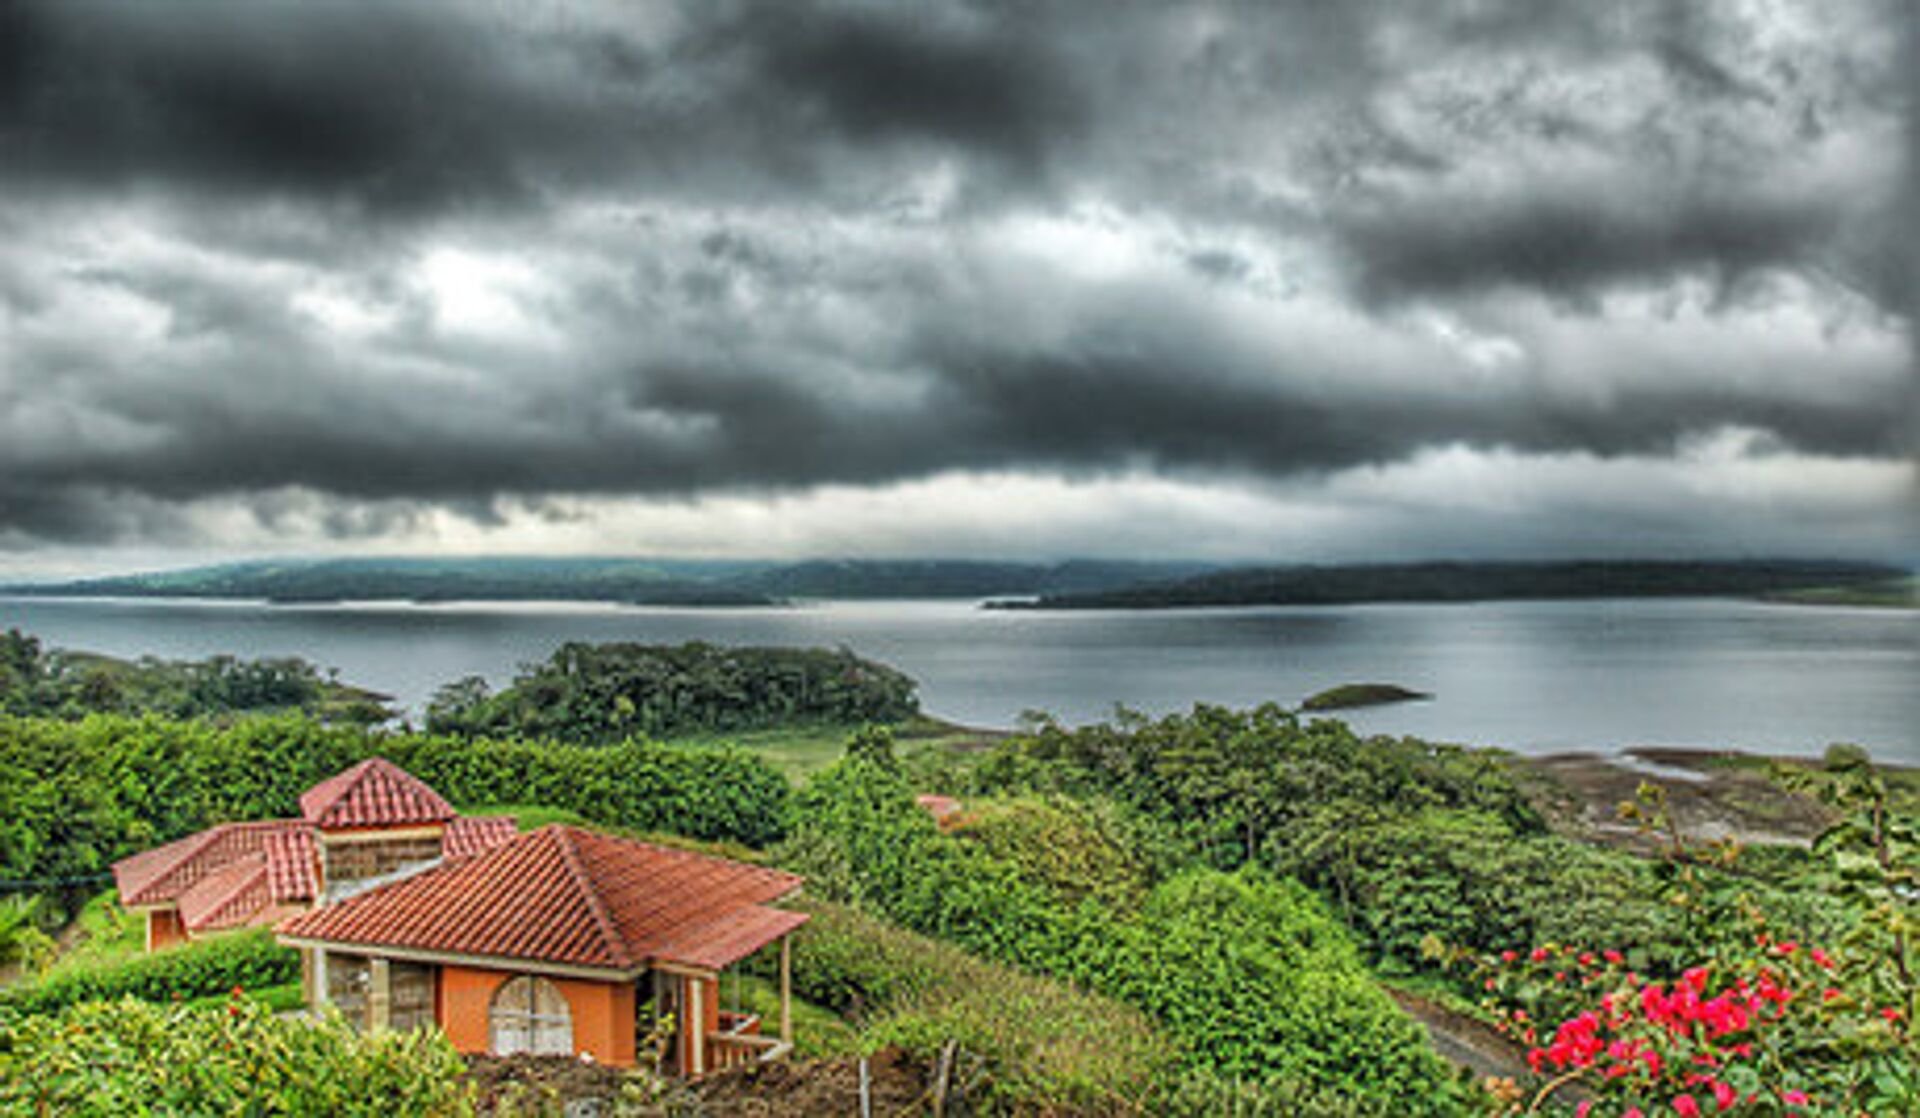 Коста рика северная. Климат Коста Рики. Коста-Рика центральное плато. Коста Рика природа климат. Богатый берег Коста Рика.